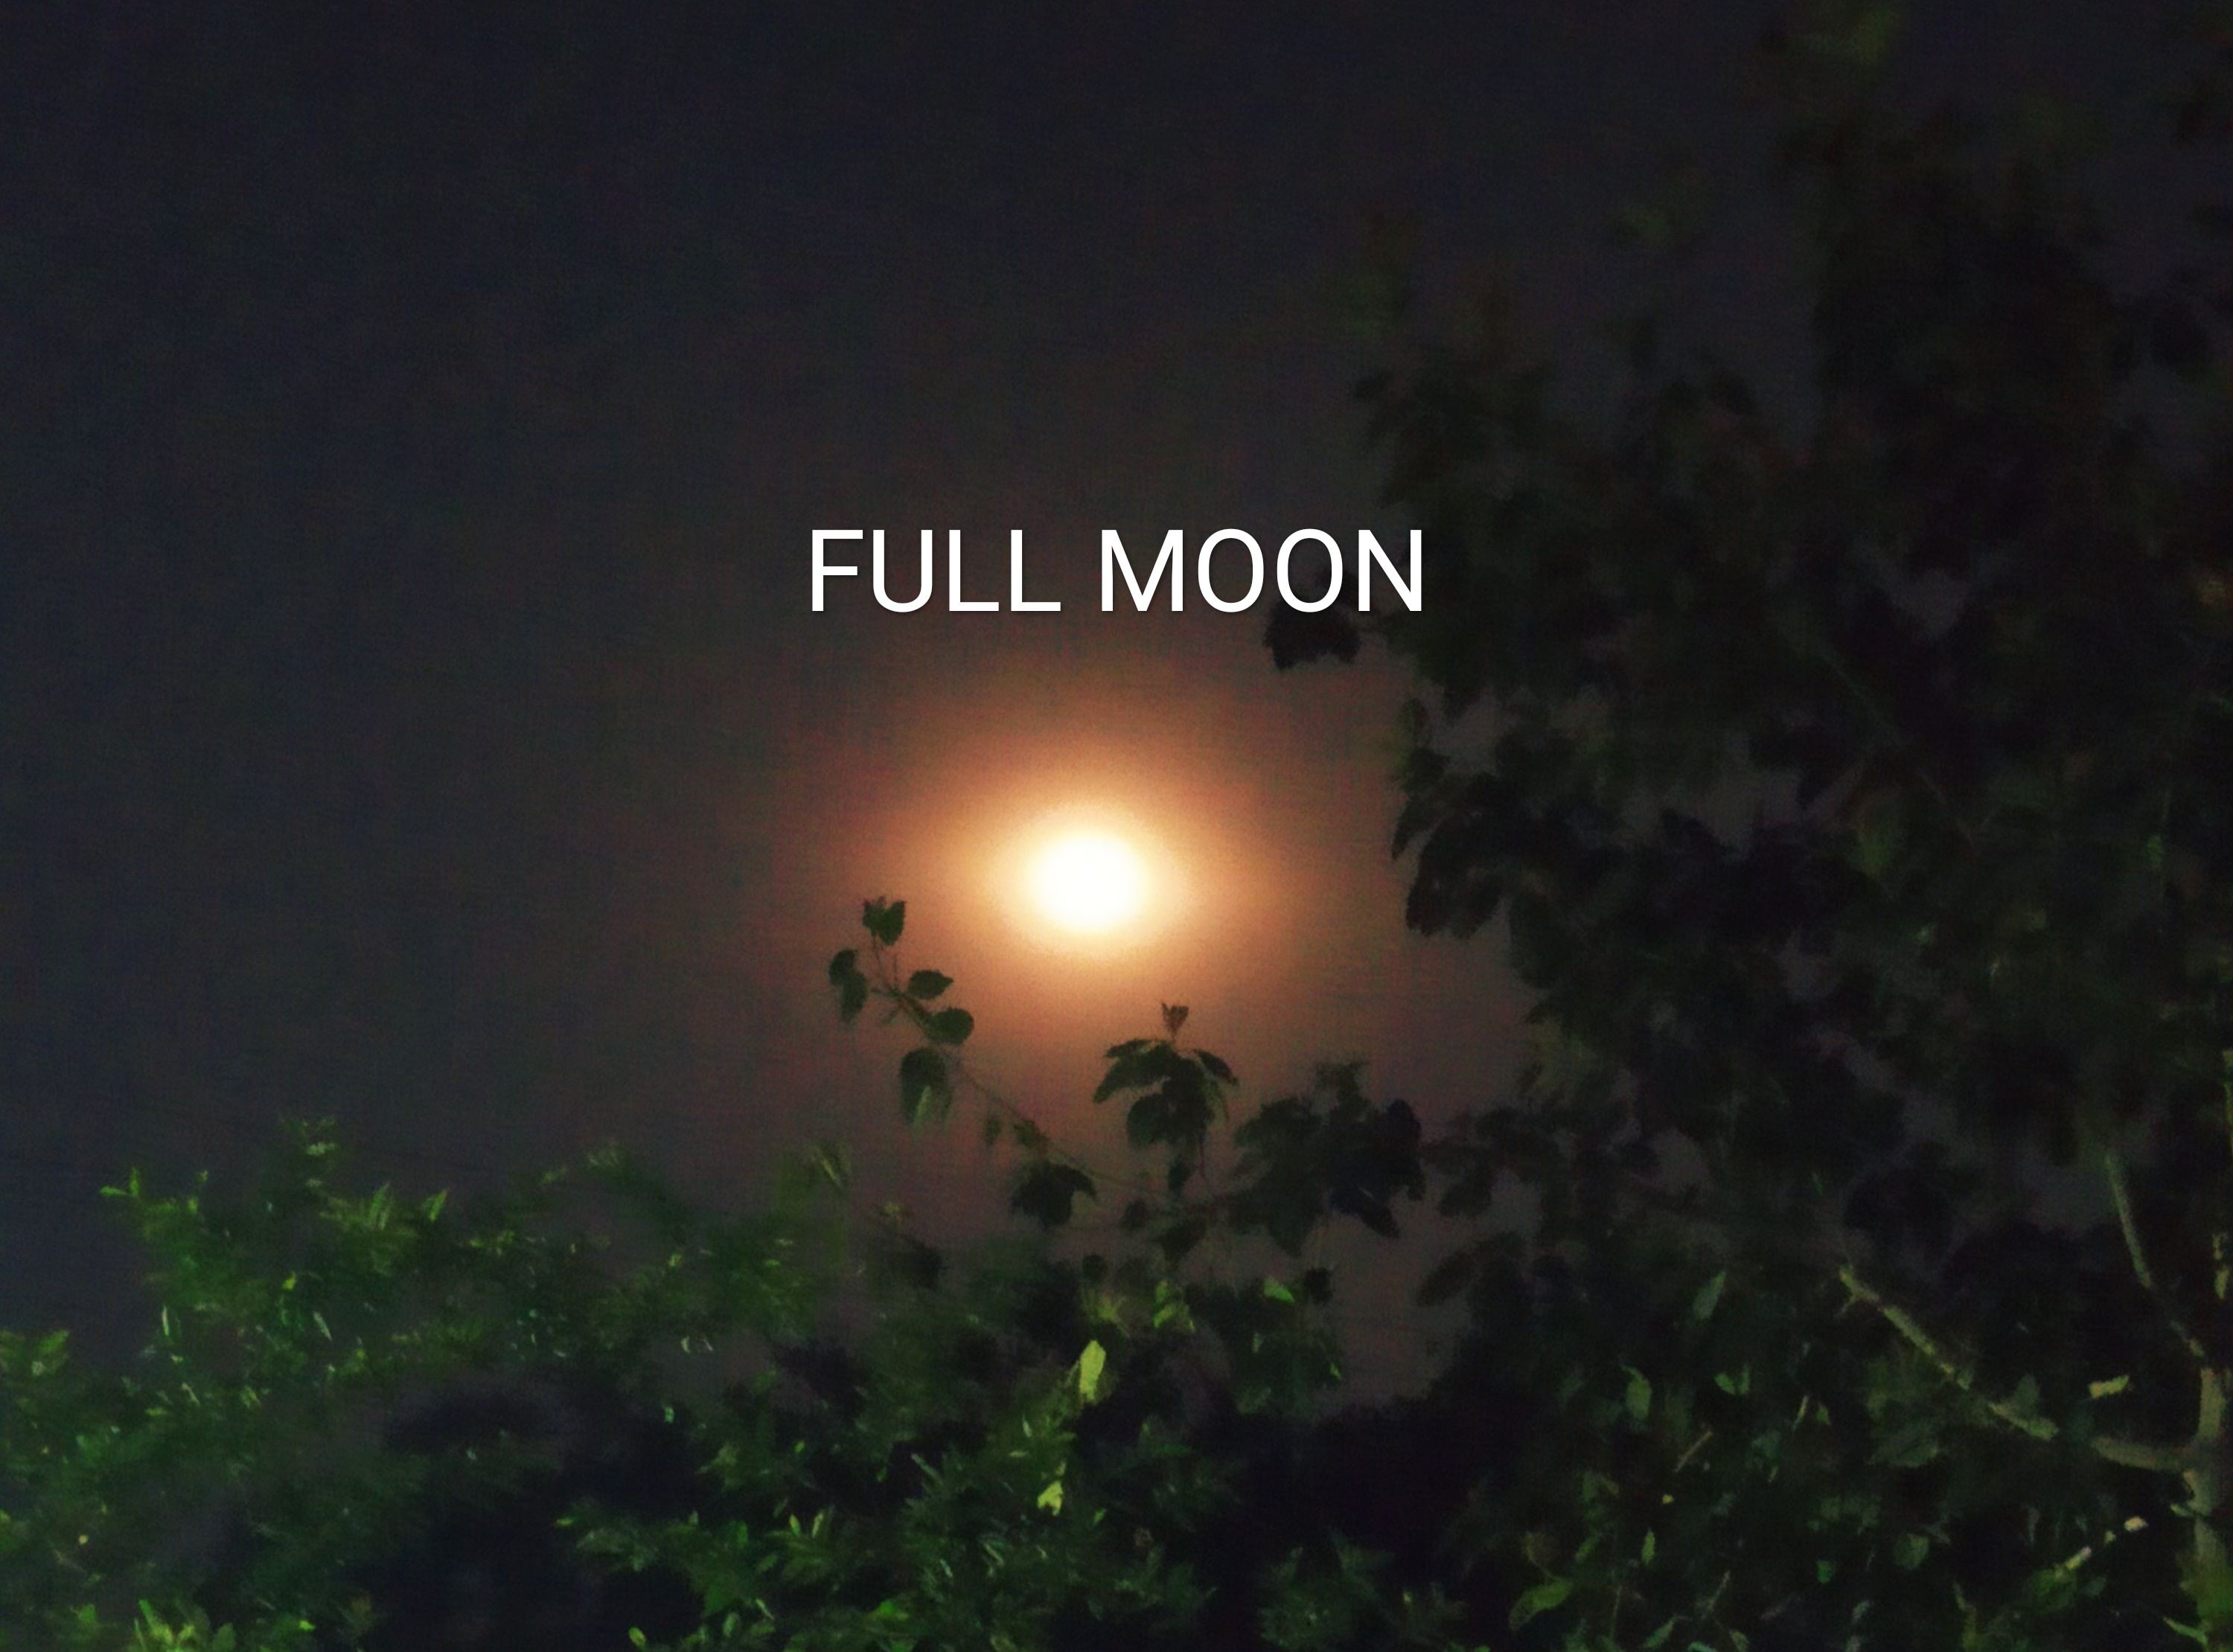 a full moon image